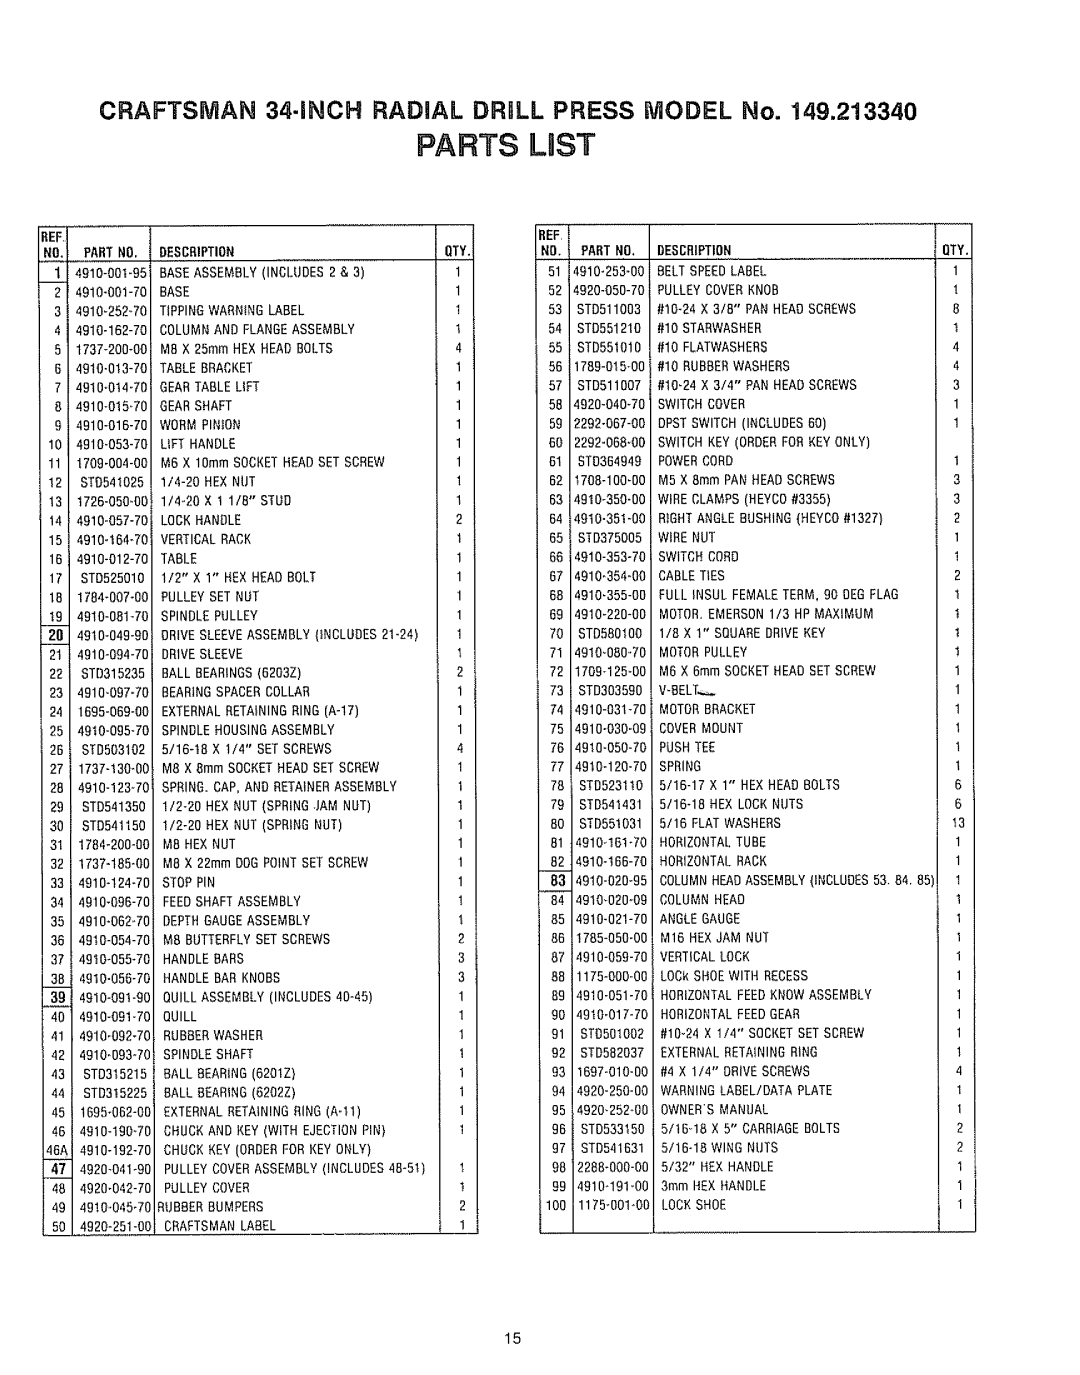 Sears 149.213340 warranty Parts List, CRAFTSMAN 34-iNCH RADIAL DRULL PRESS MODEL No, Description 